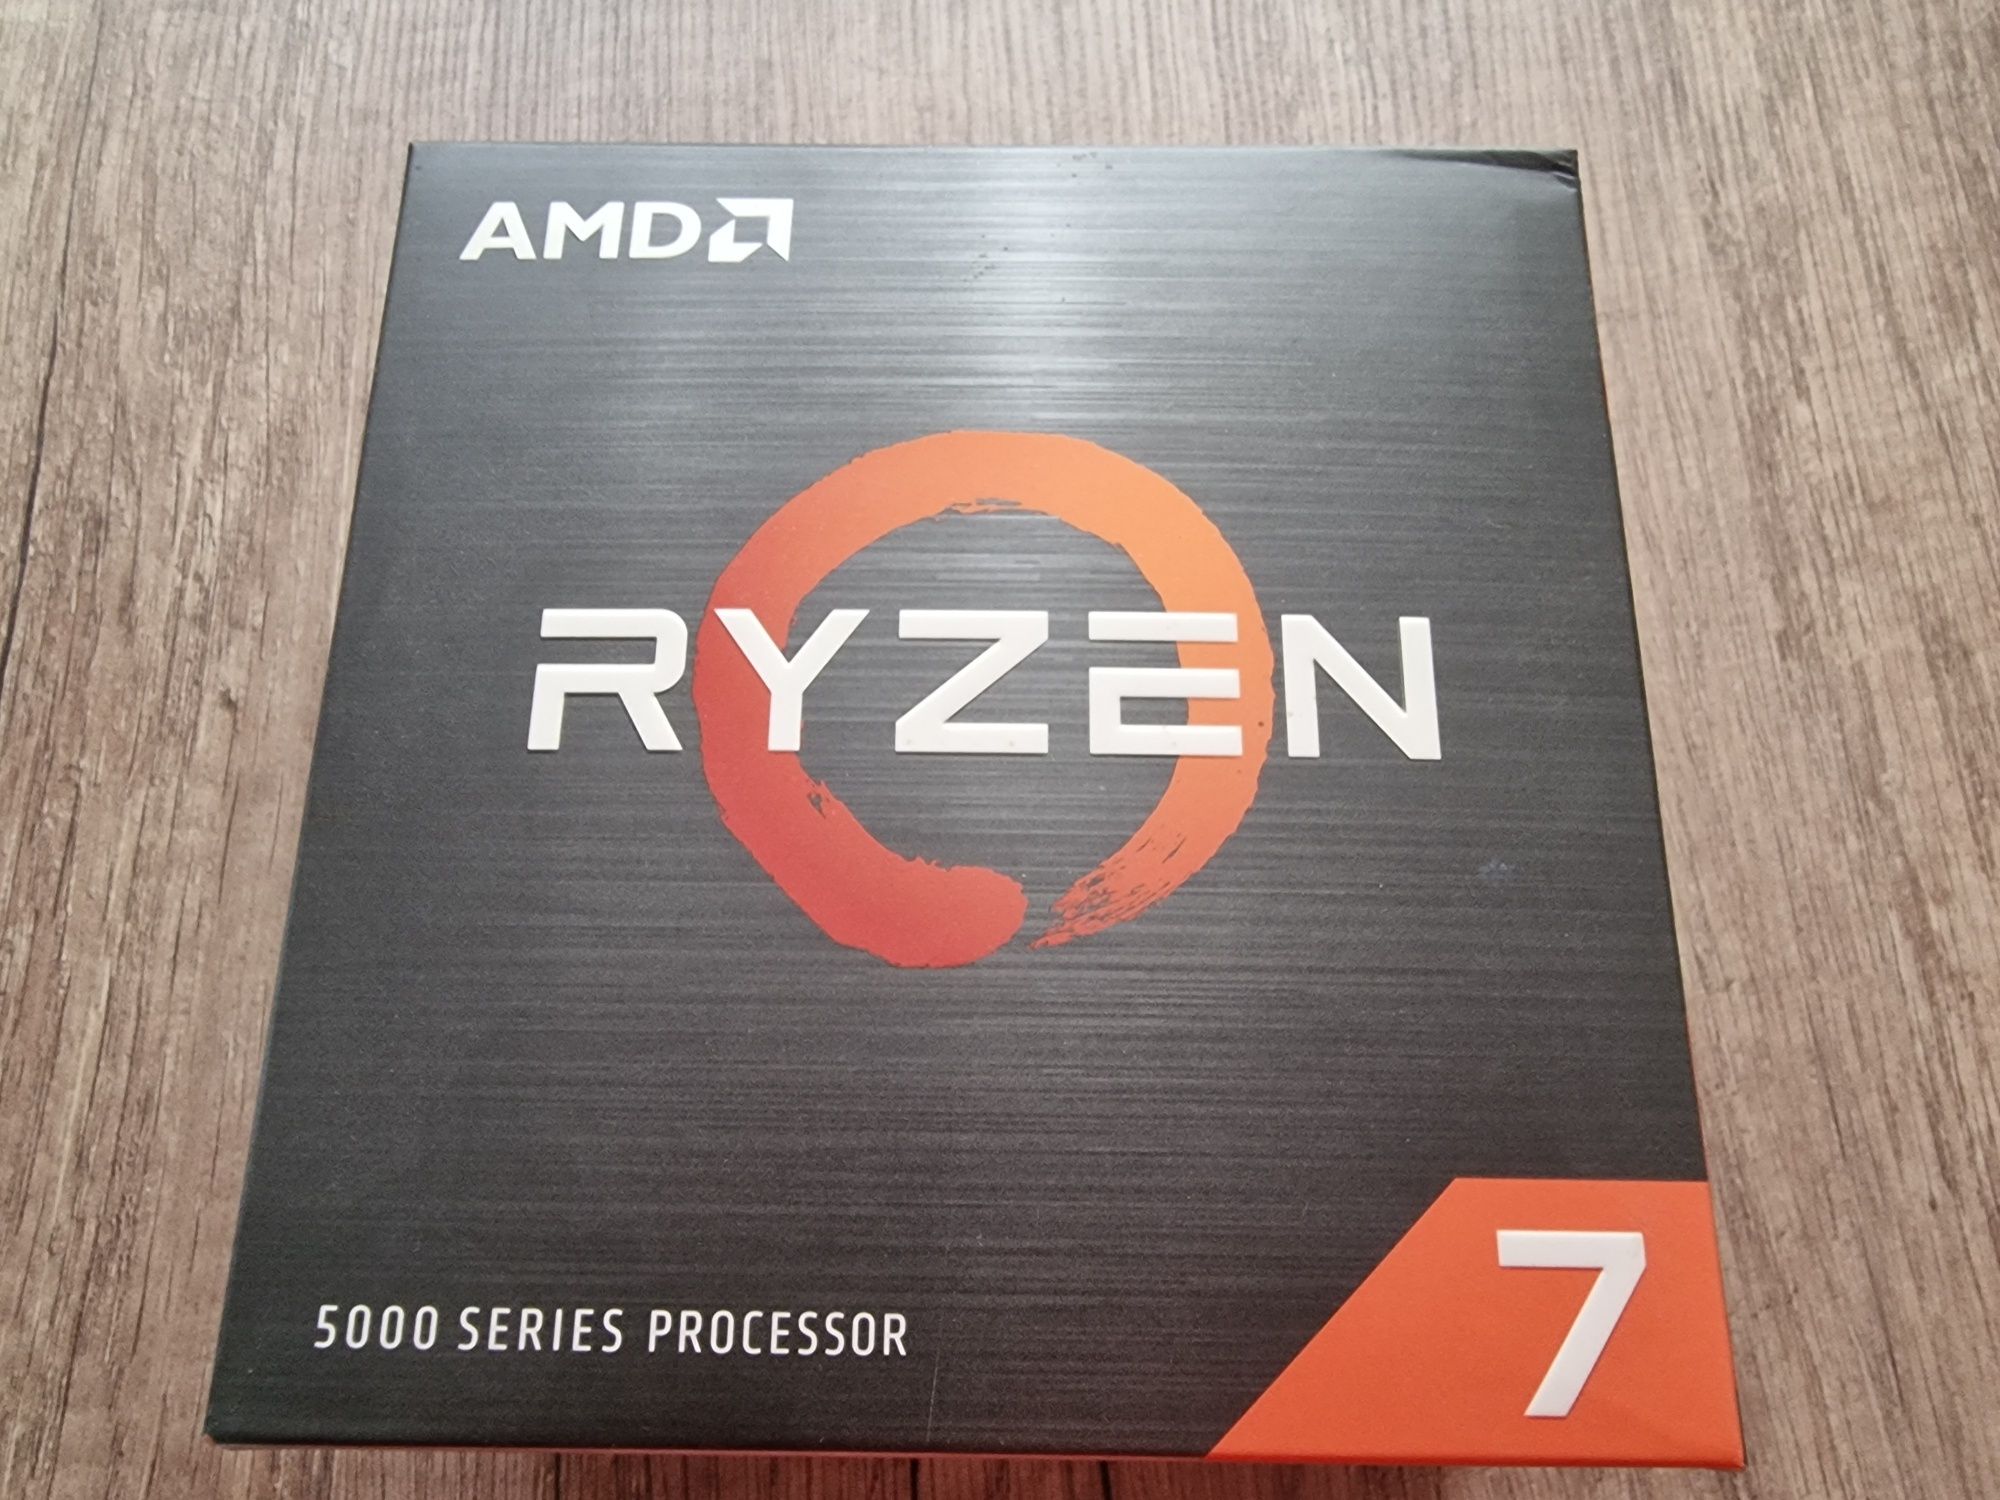 Procesor AMD Ryzen 7 5800x